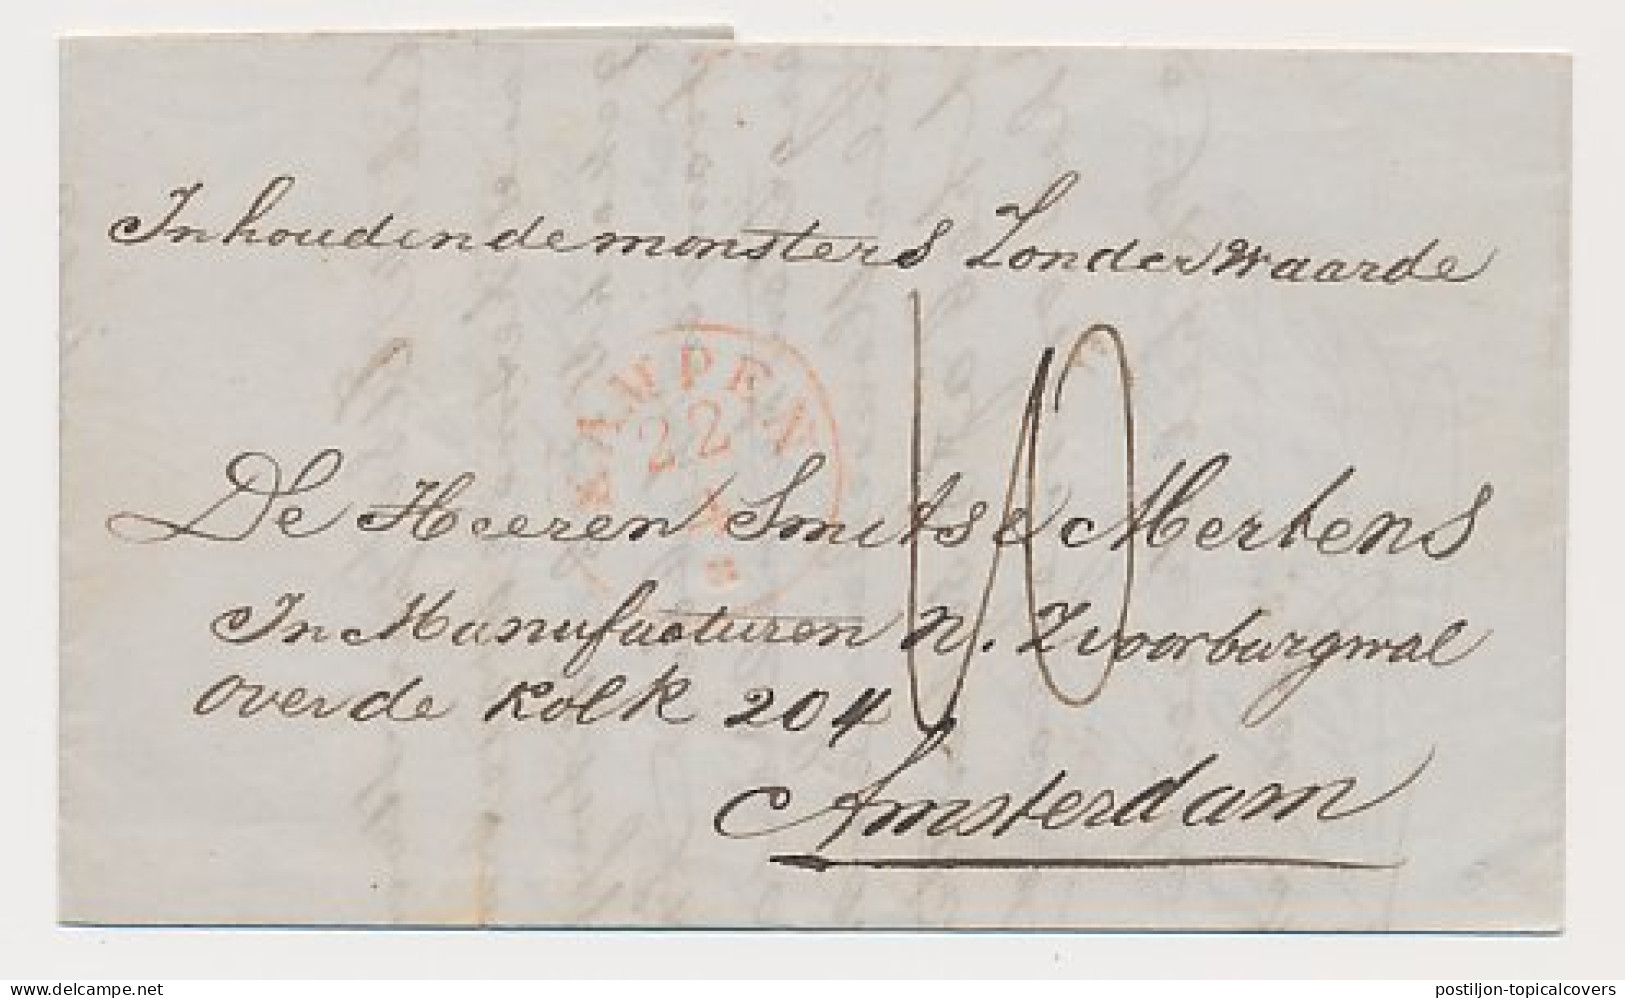 Kampen - Amsterdam 1859 - Monster Zonder Waarde - ...-1852 Préphilatélie